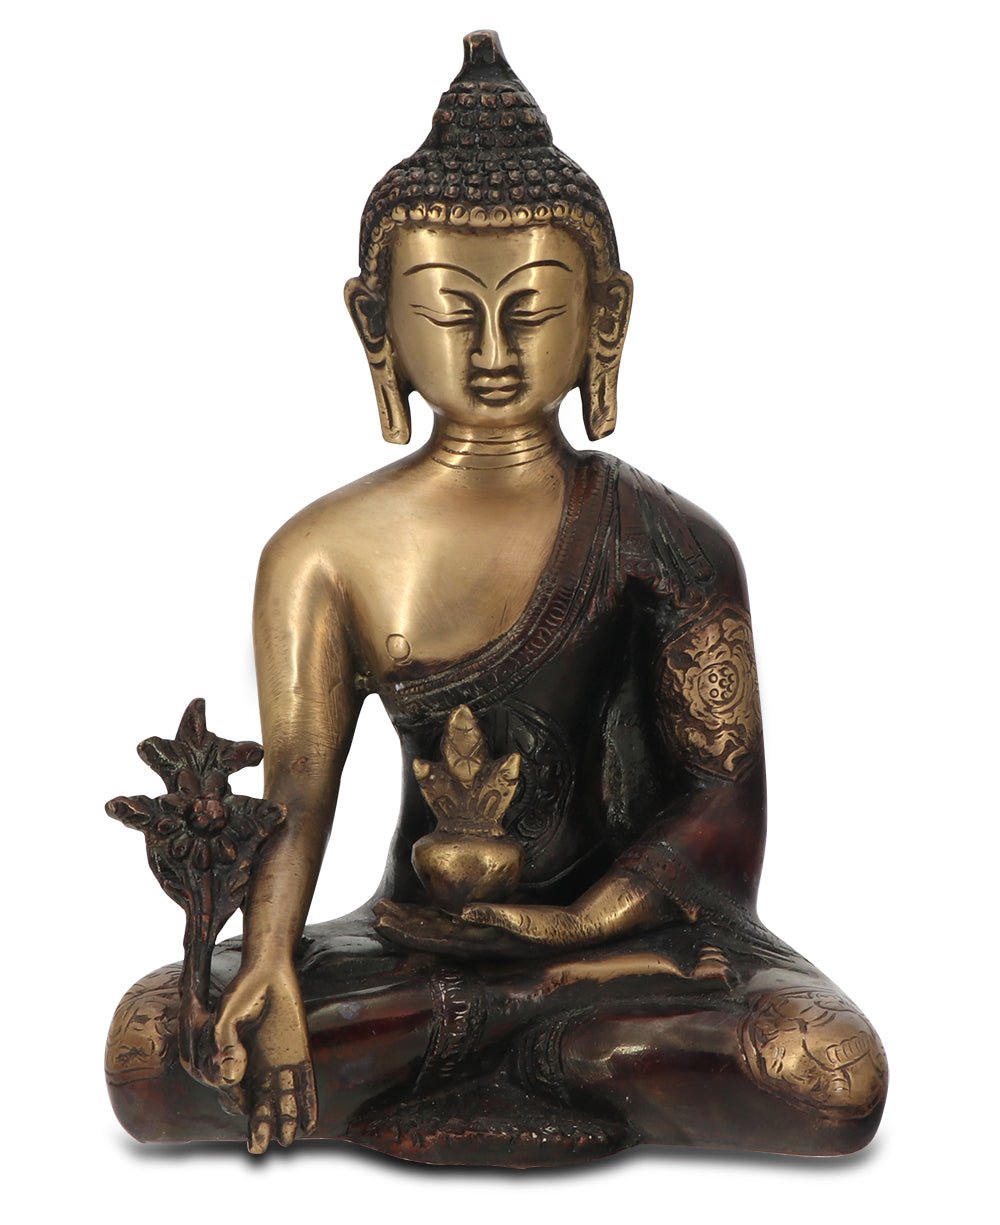 Medicine Buddha Statue in Brass With Intricate Design - Sculptures & Statues